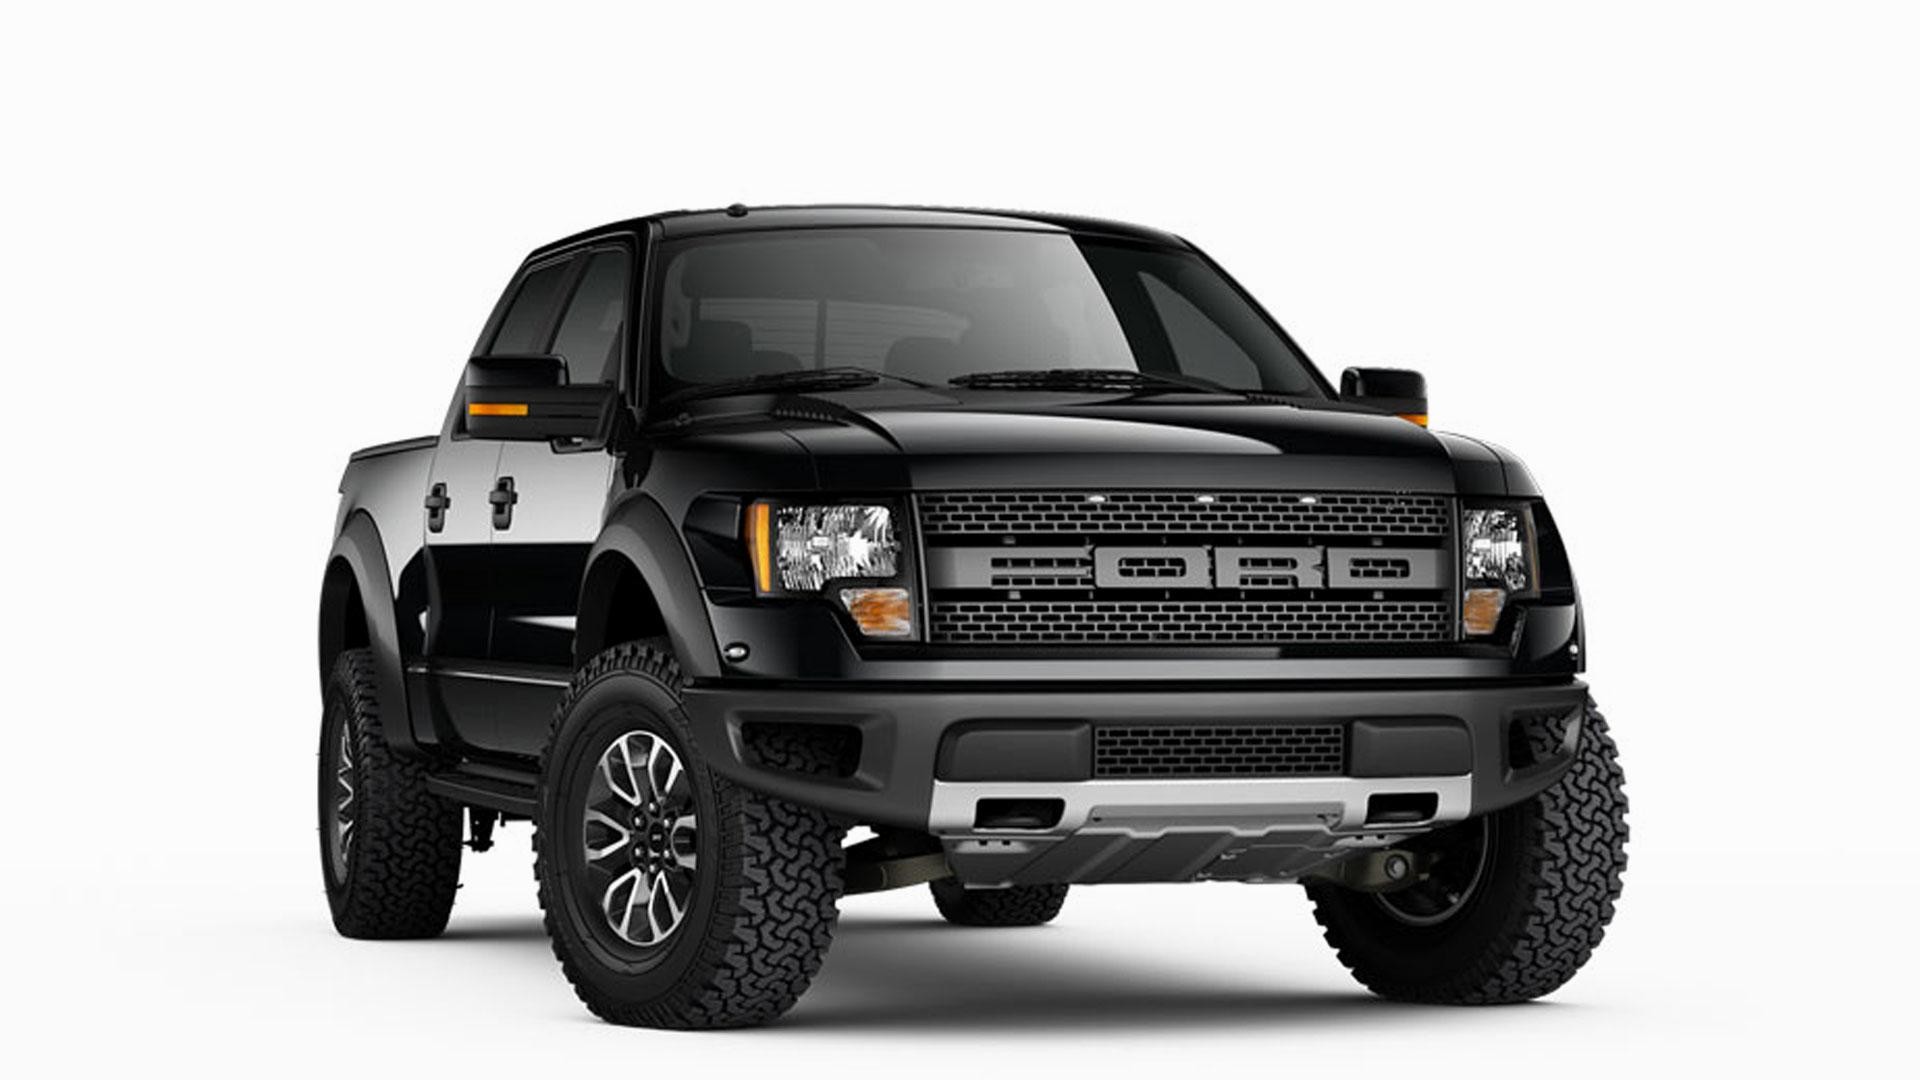 Ford-Raptor-F-high-performance-trucks-wallpaper-wp2404790